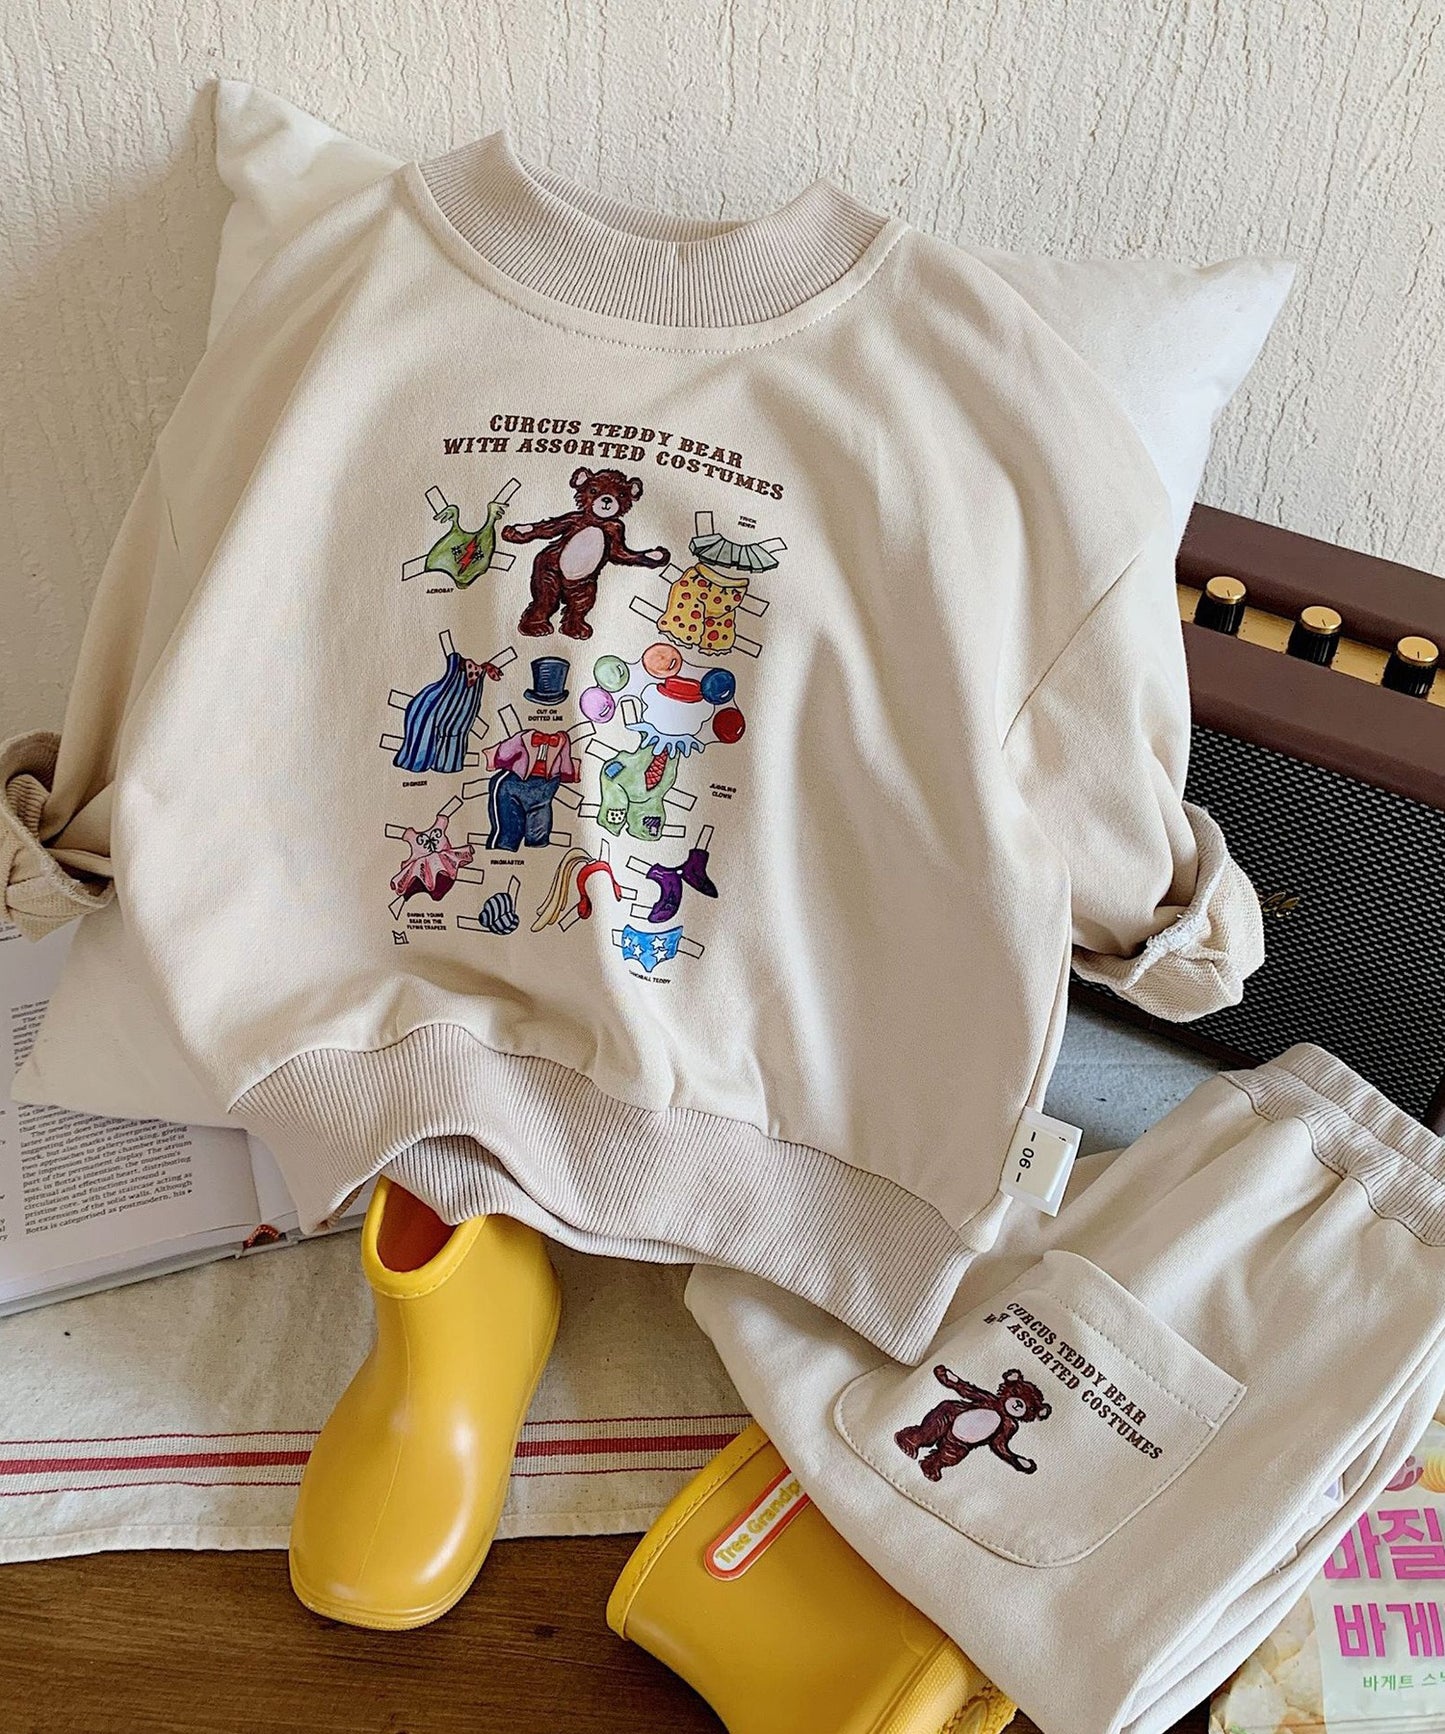 【aimoha-KIDS-】韓国子供服 かわいいレトロ調クマプリントスウェットセットアップ